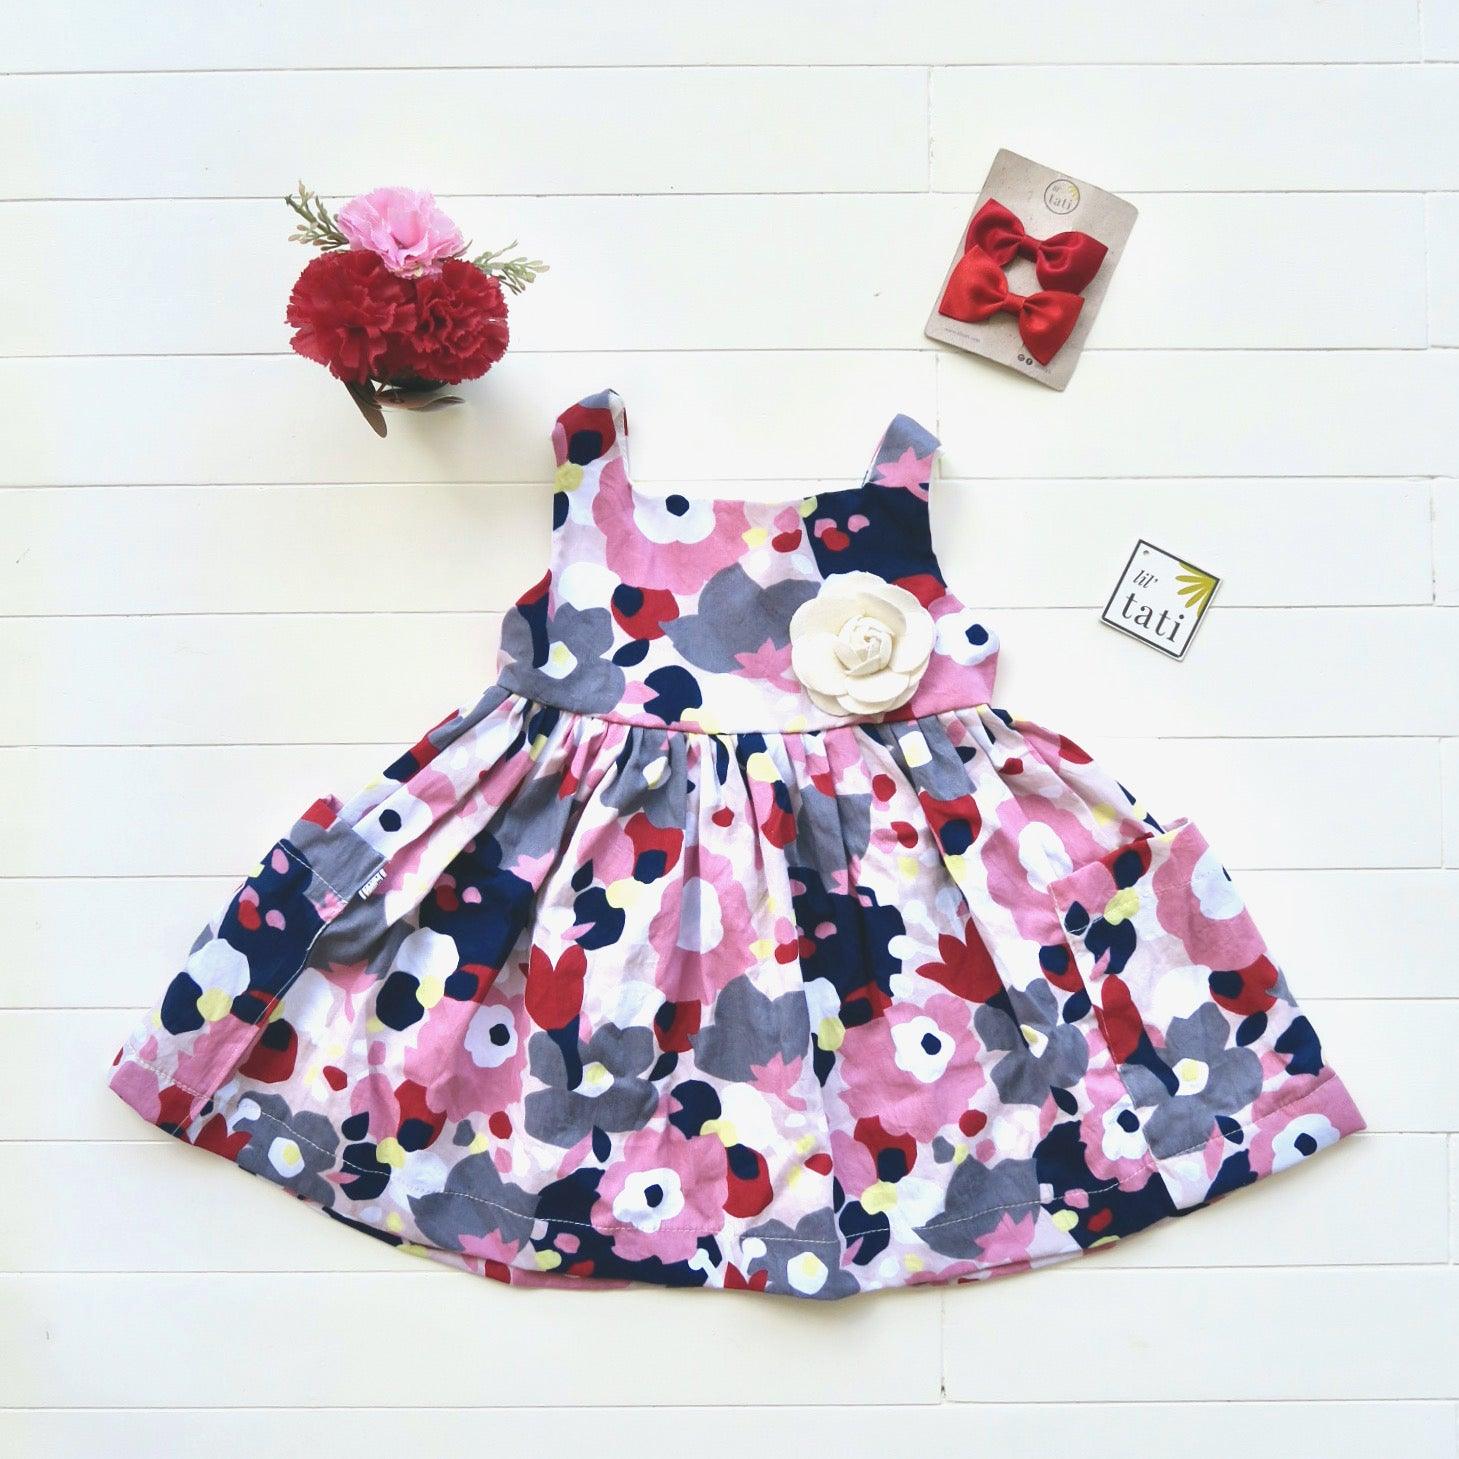 Poppy Dress in Abstract Flowers Pink Print - Lil' Tati